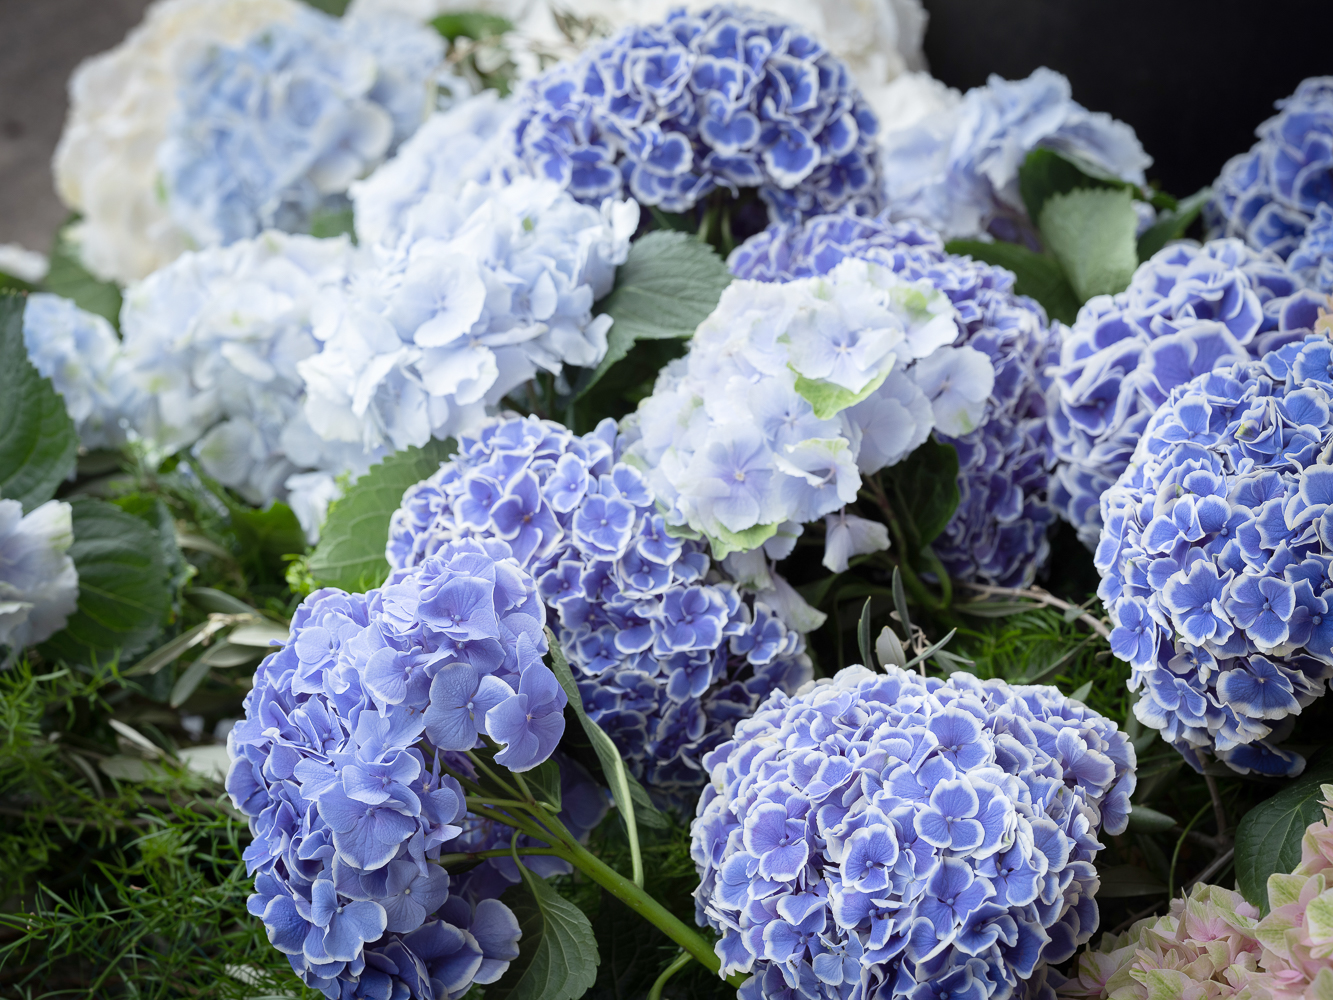 Hydrangea, Your Go-to Flower for a Bold and Striking Design - hydrangeaworld blue and white - sarah richardson - blog on thursd - Photographer Casey Orr